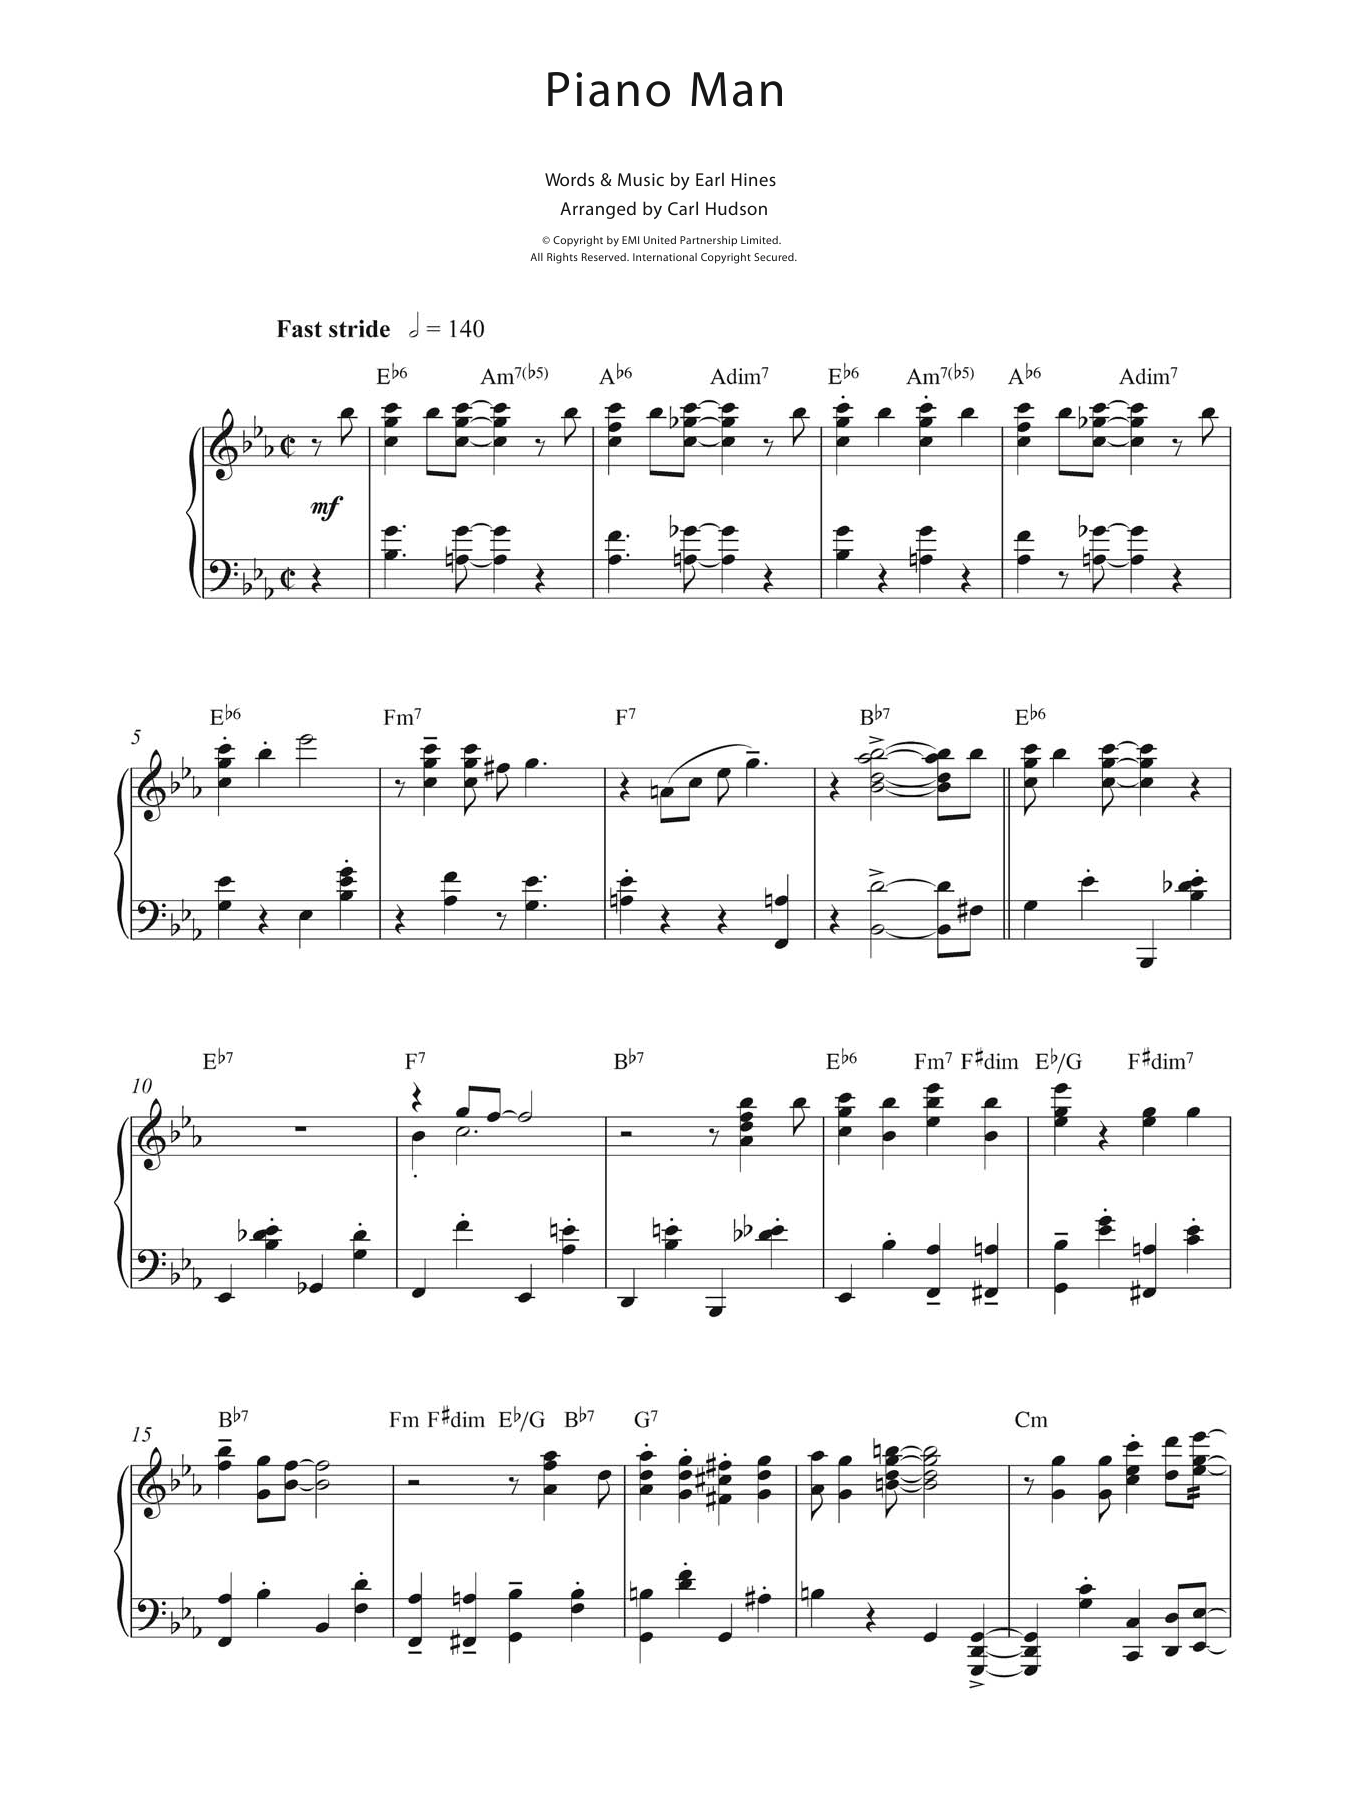 Earl Hines Piano Man Sheet Music Notes & Chords for Piano - Download or Print PDF